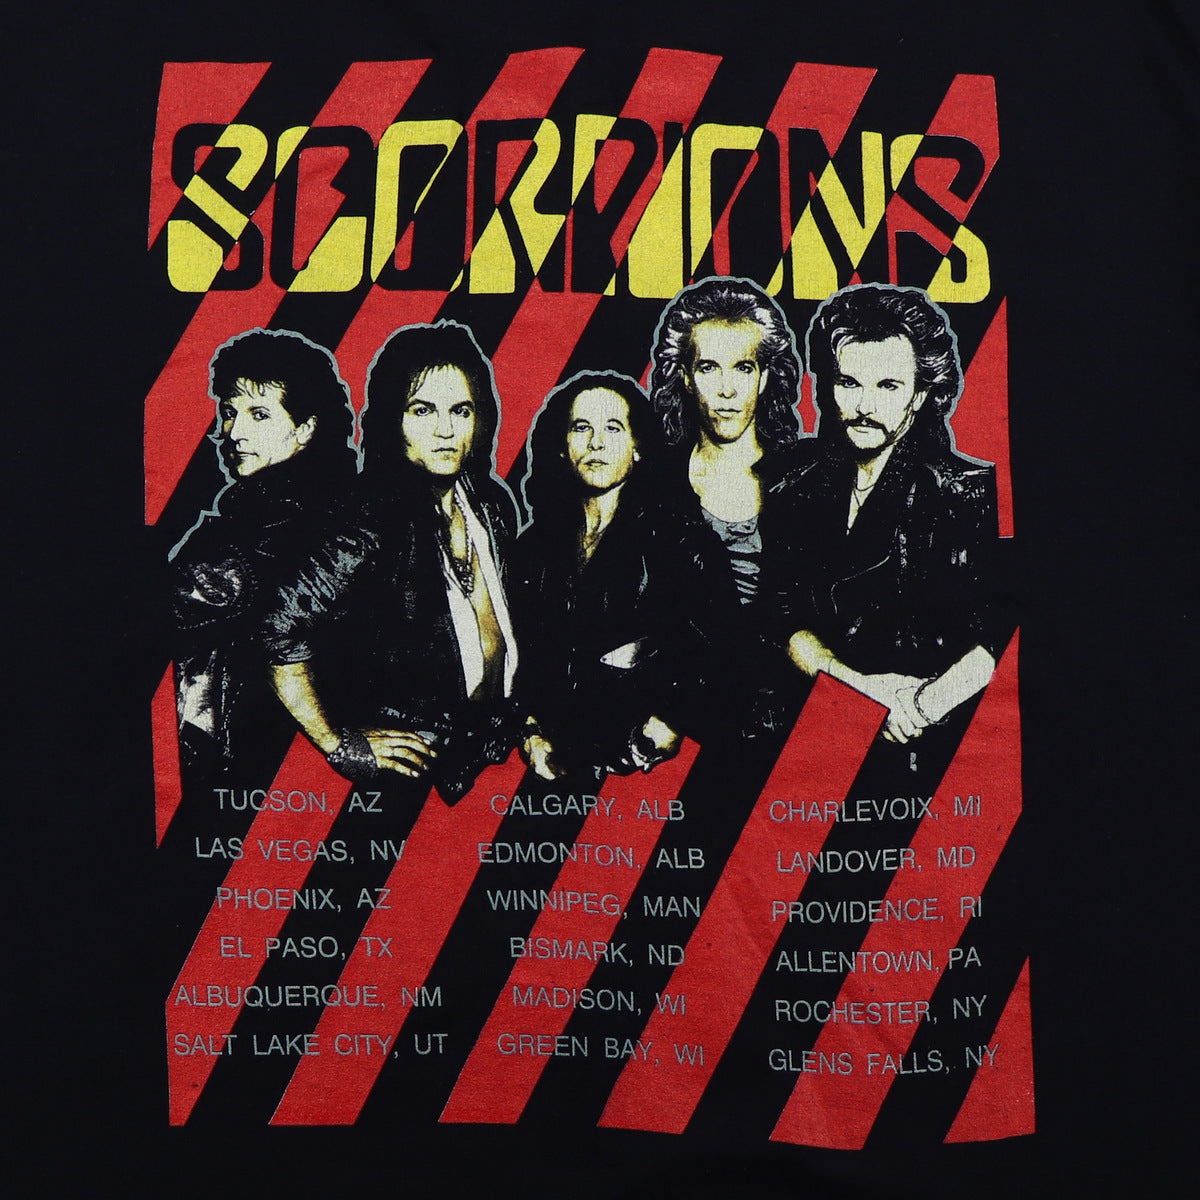 1988 Scorpions Savage Amusement Tour Shirt